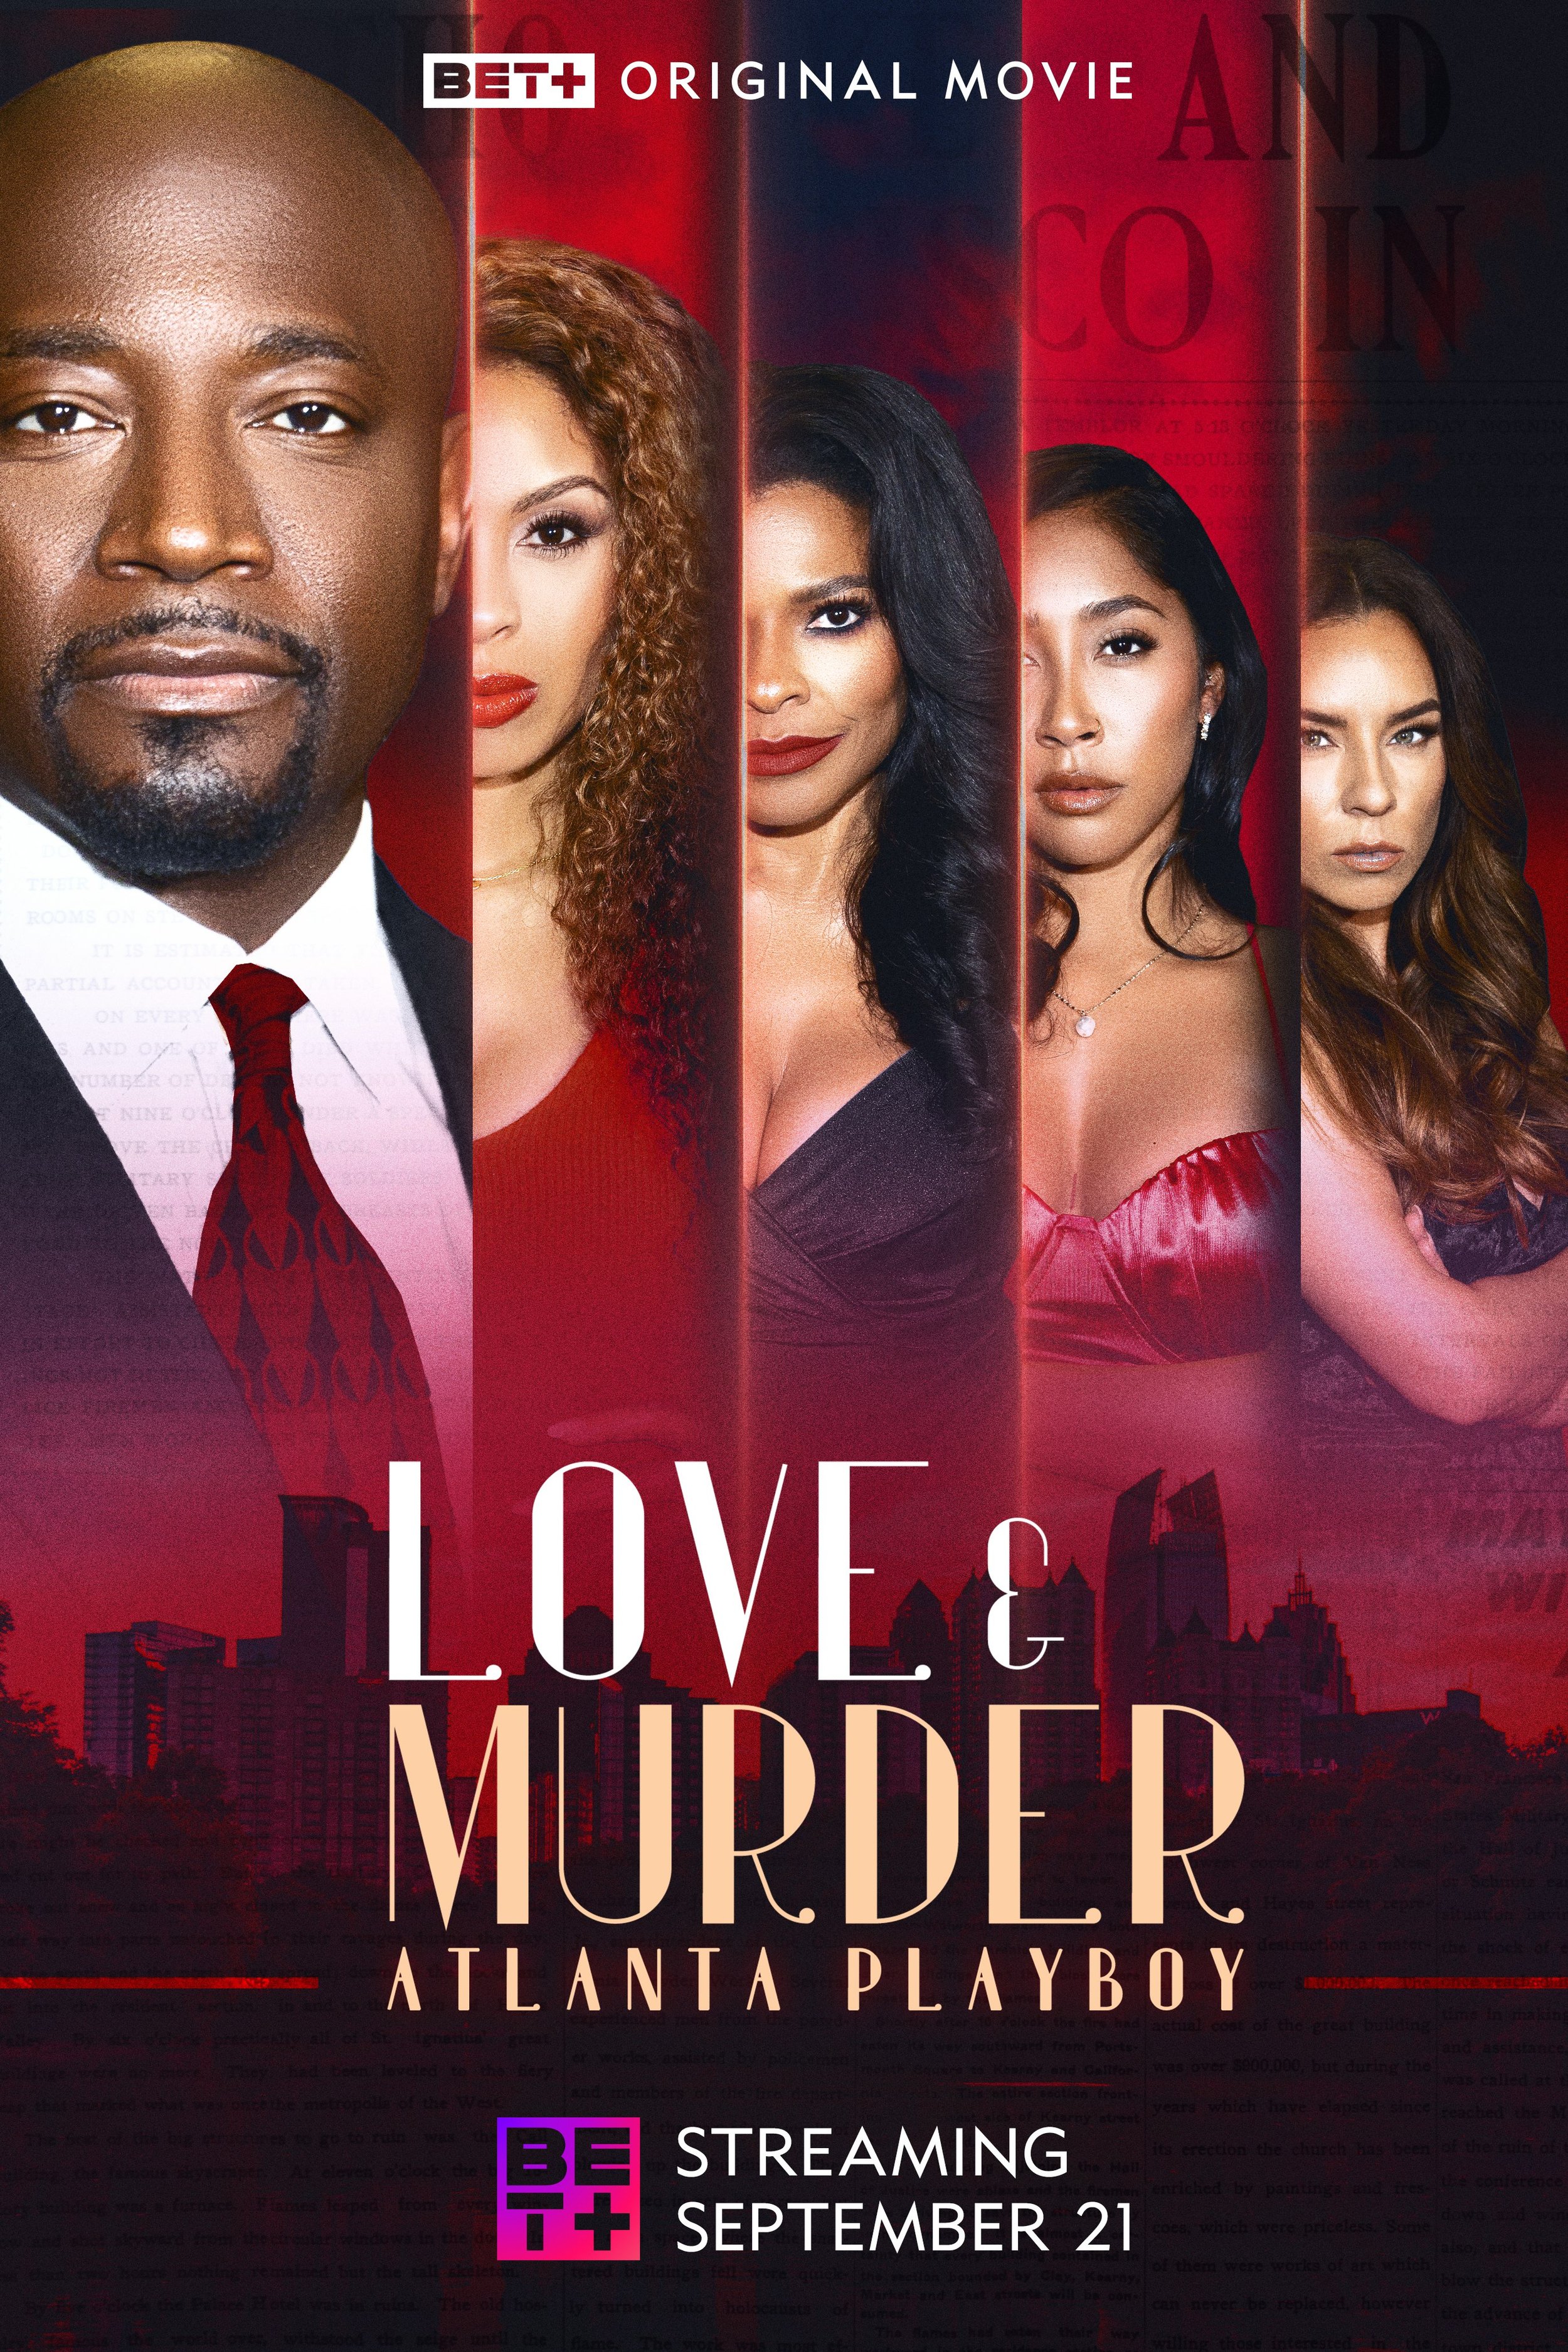 Love and Murder Atlanta Playboy key art.jpg